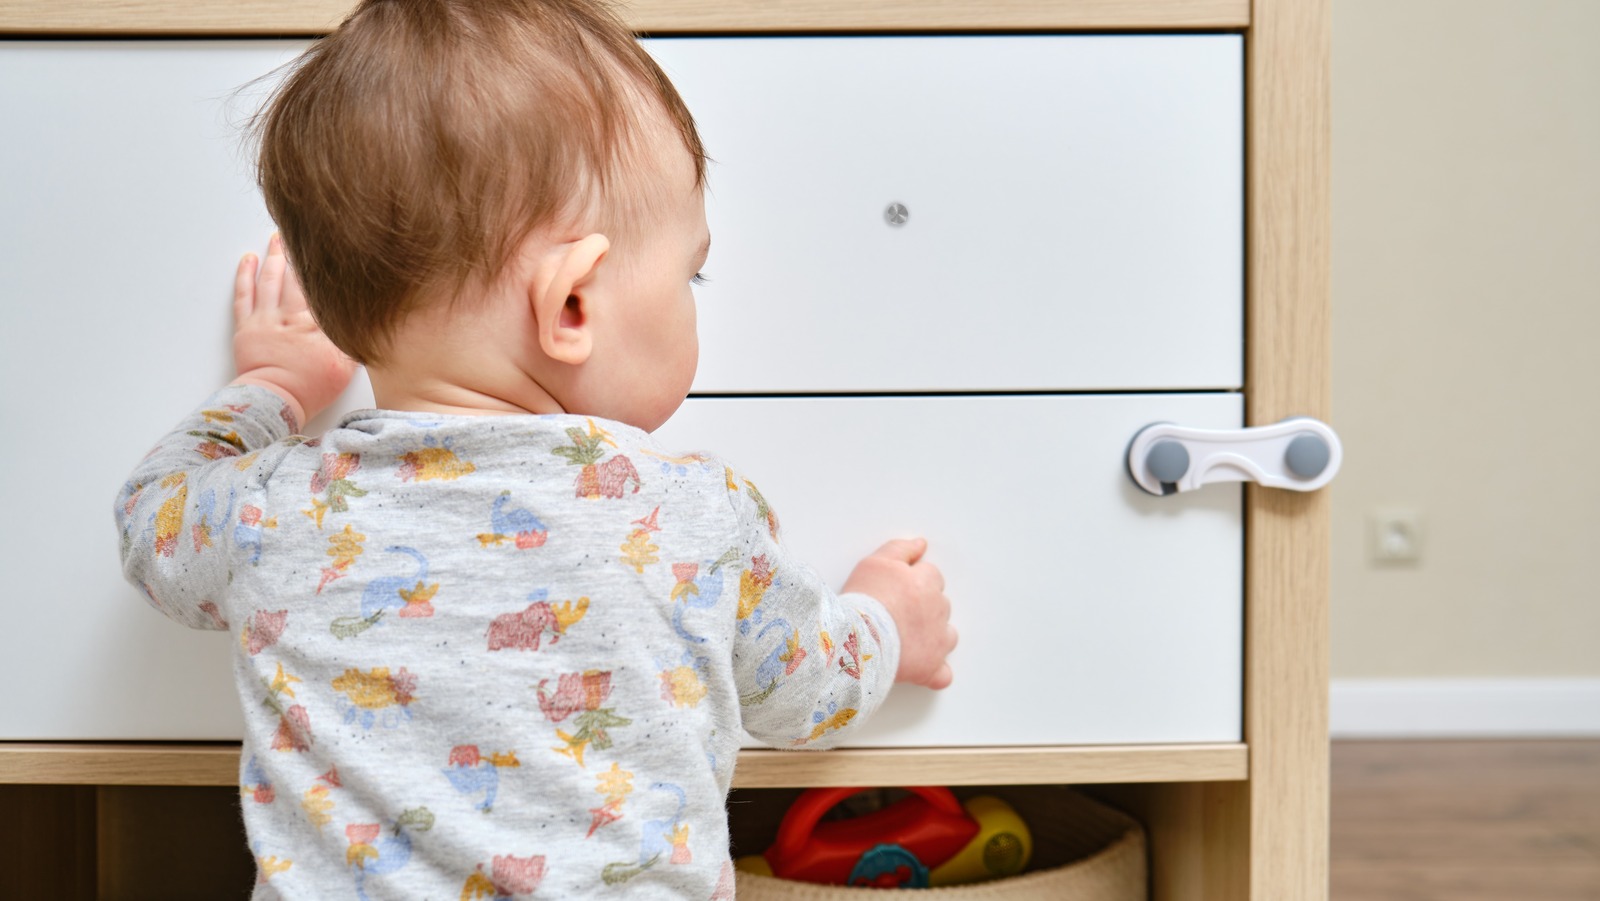 Oven Door Lock Kitchen Baby Proof Child Safety Children Protection